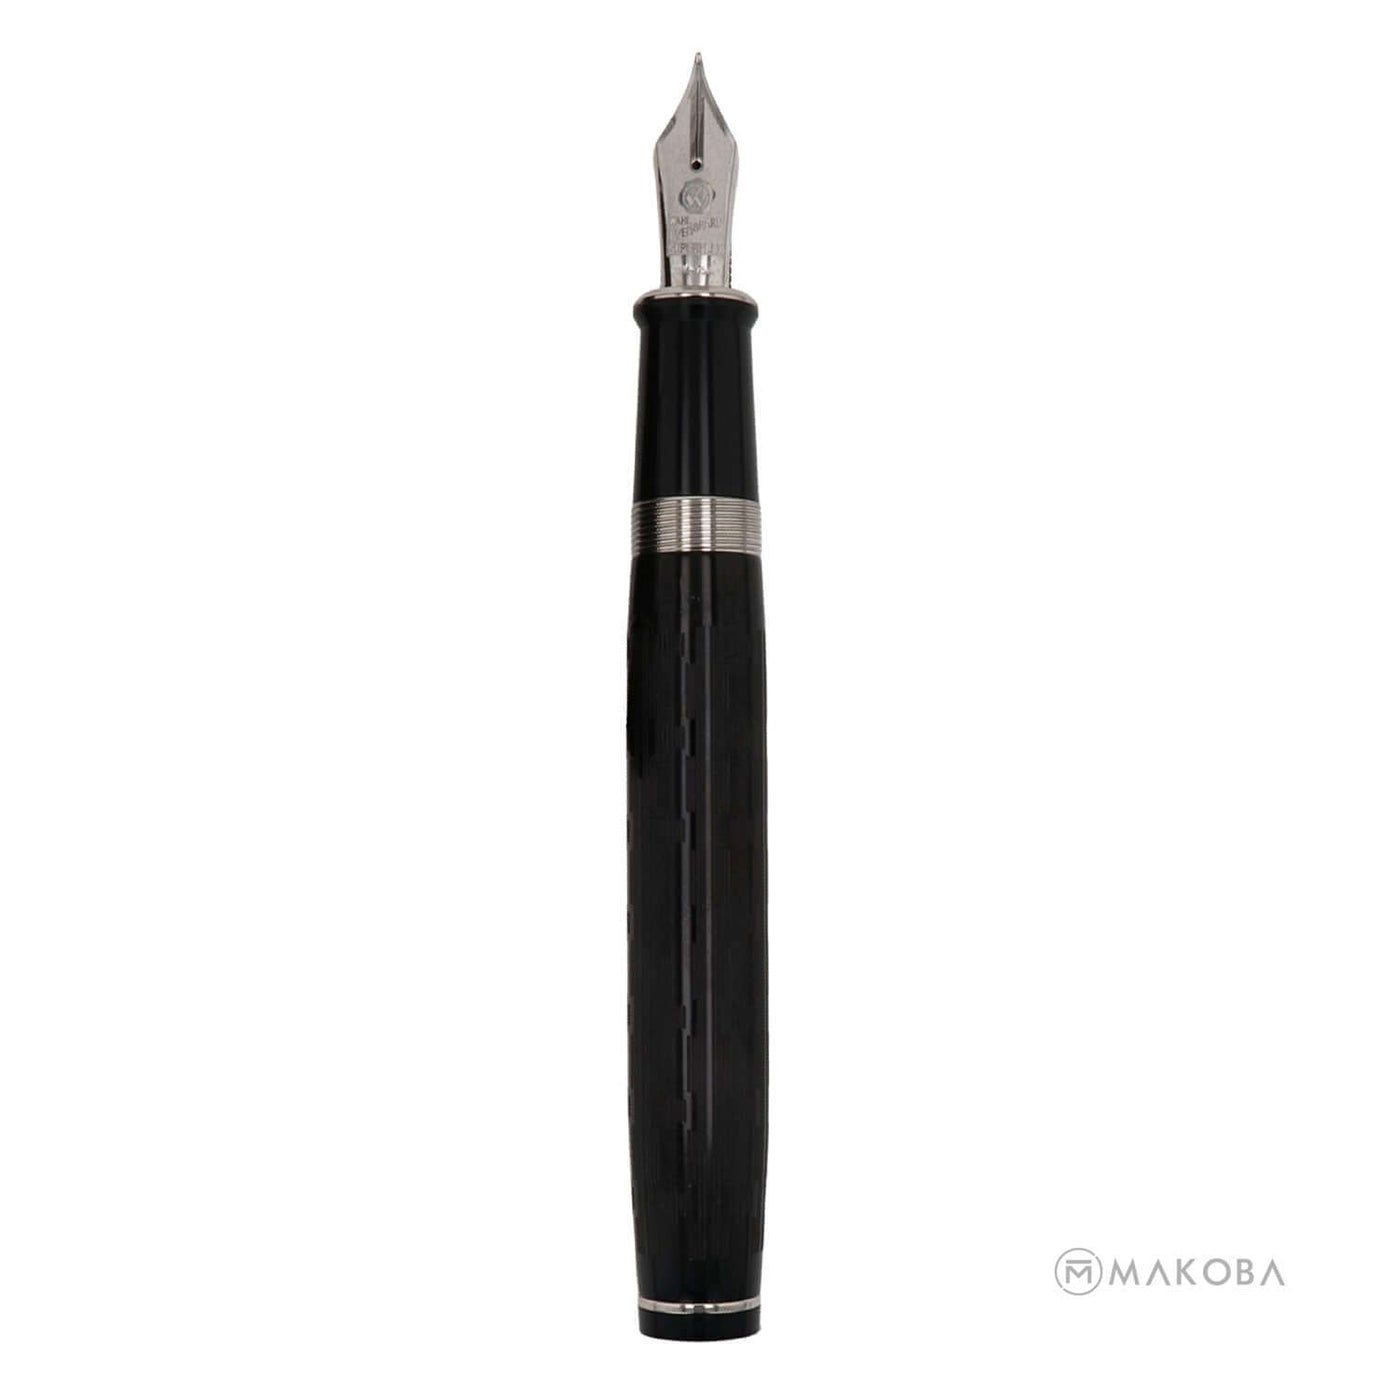 Wahl Eversharp Decoband Oversized Fountain Pen, Gatsby Black / Chrome Trim - 18K Gold Nib 4